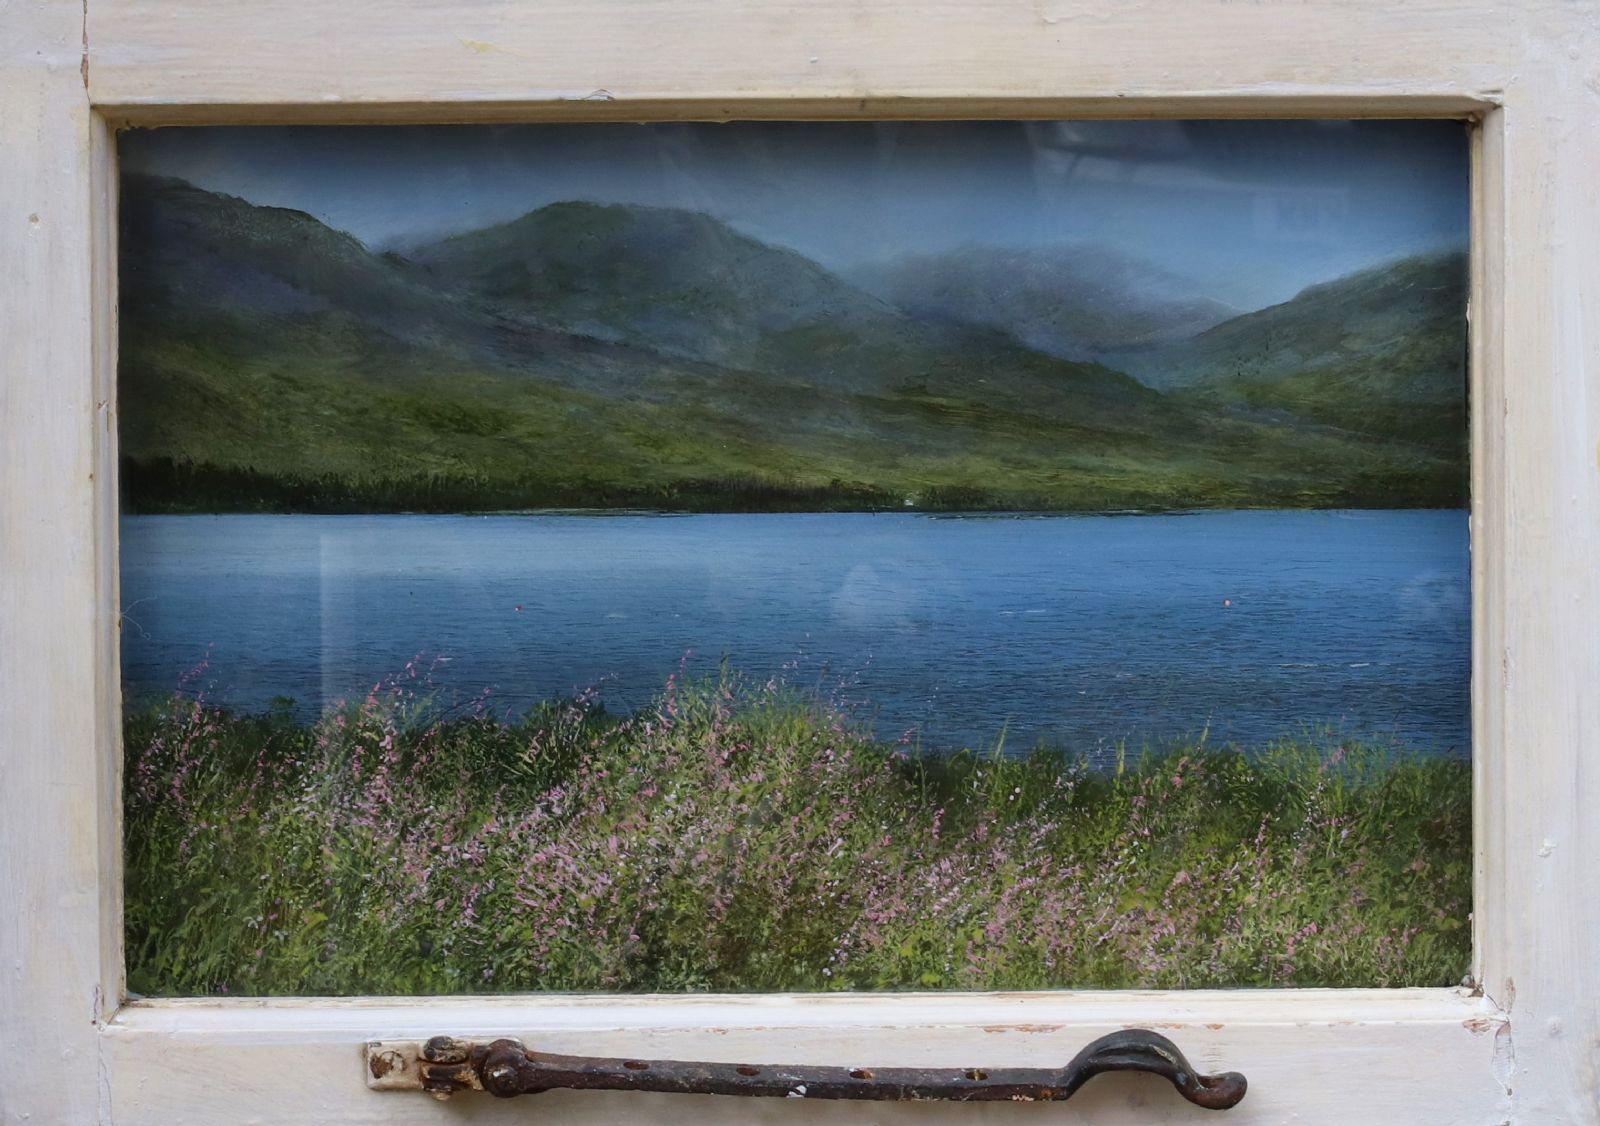 Window to the Pretty Loch by Garry Pereira